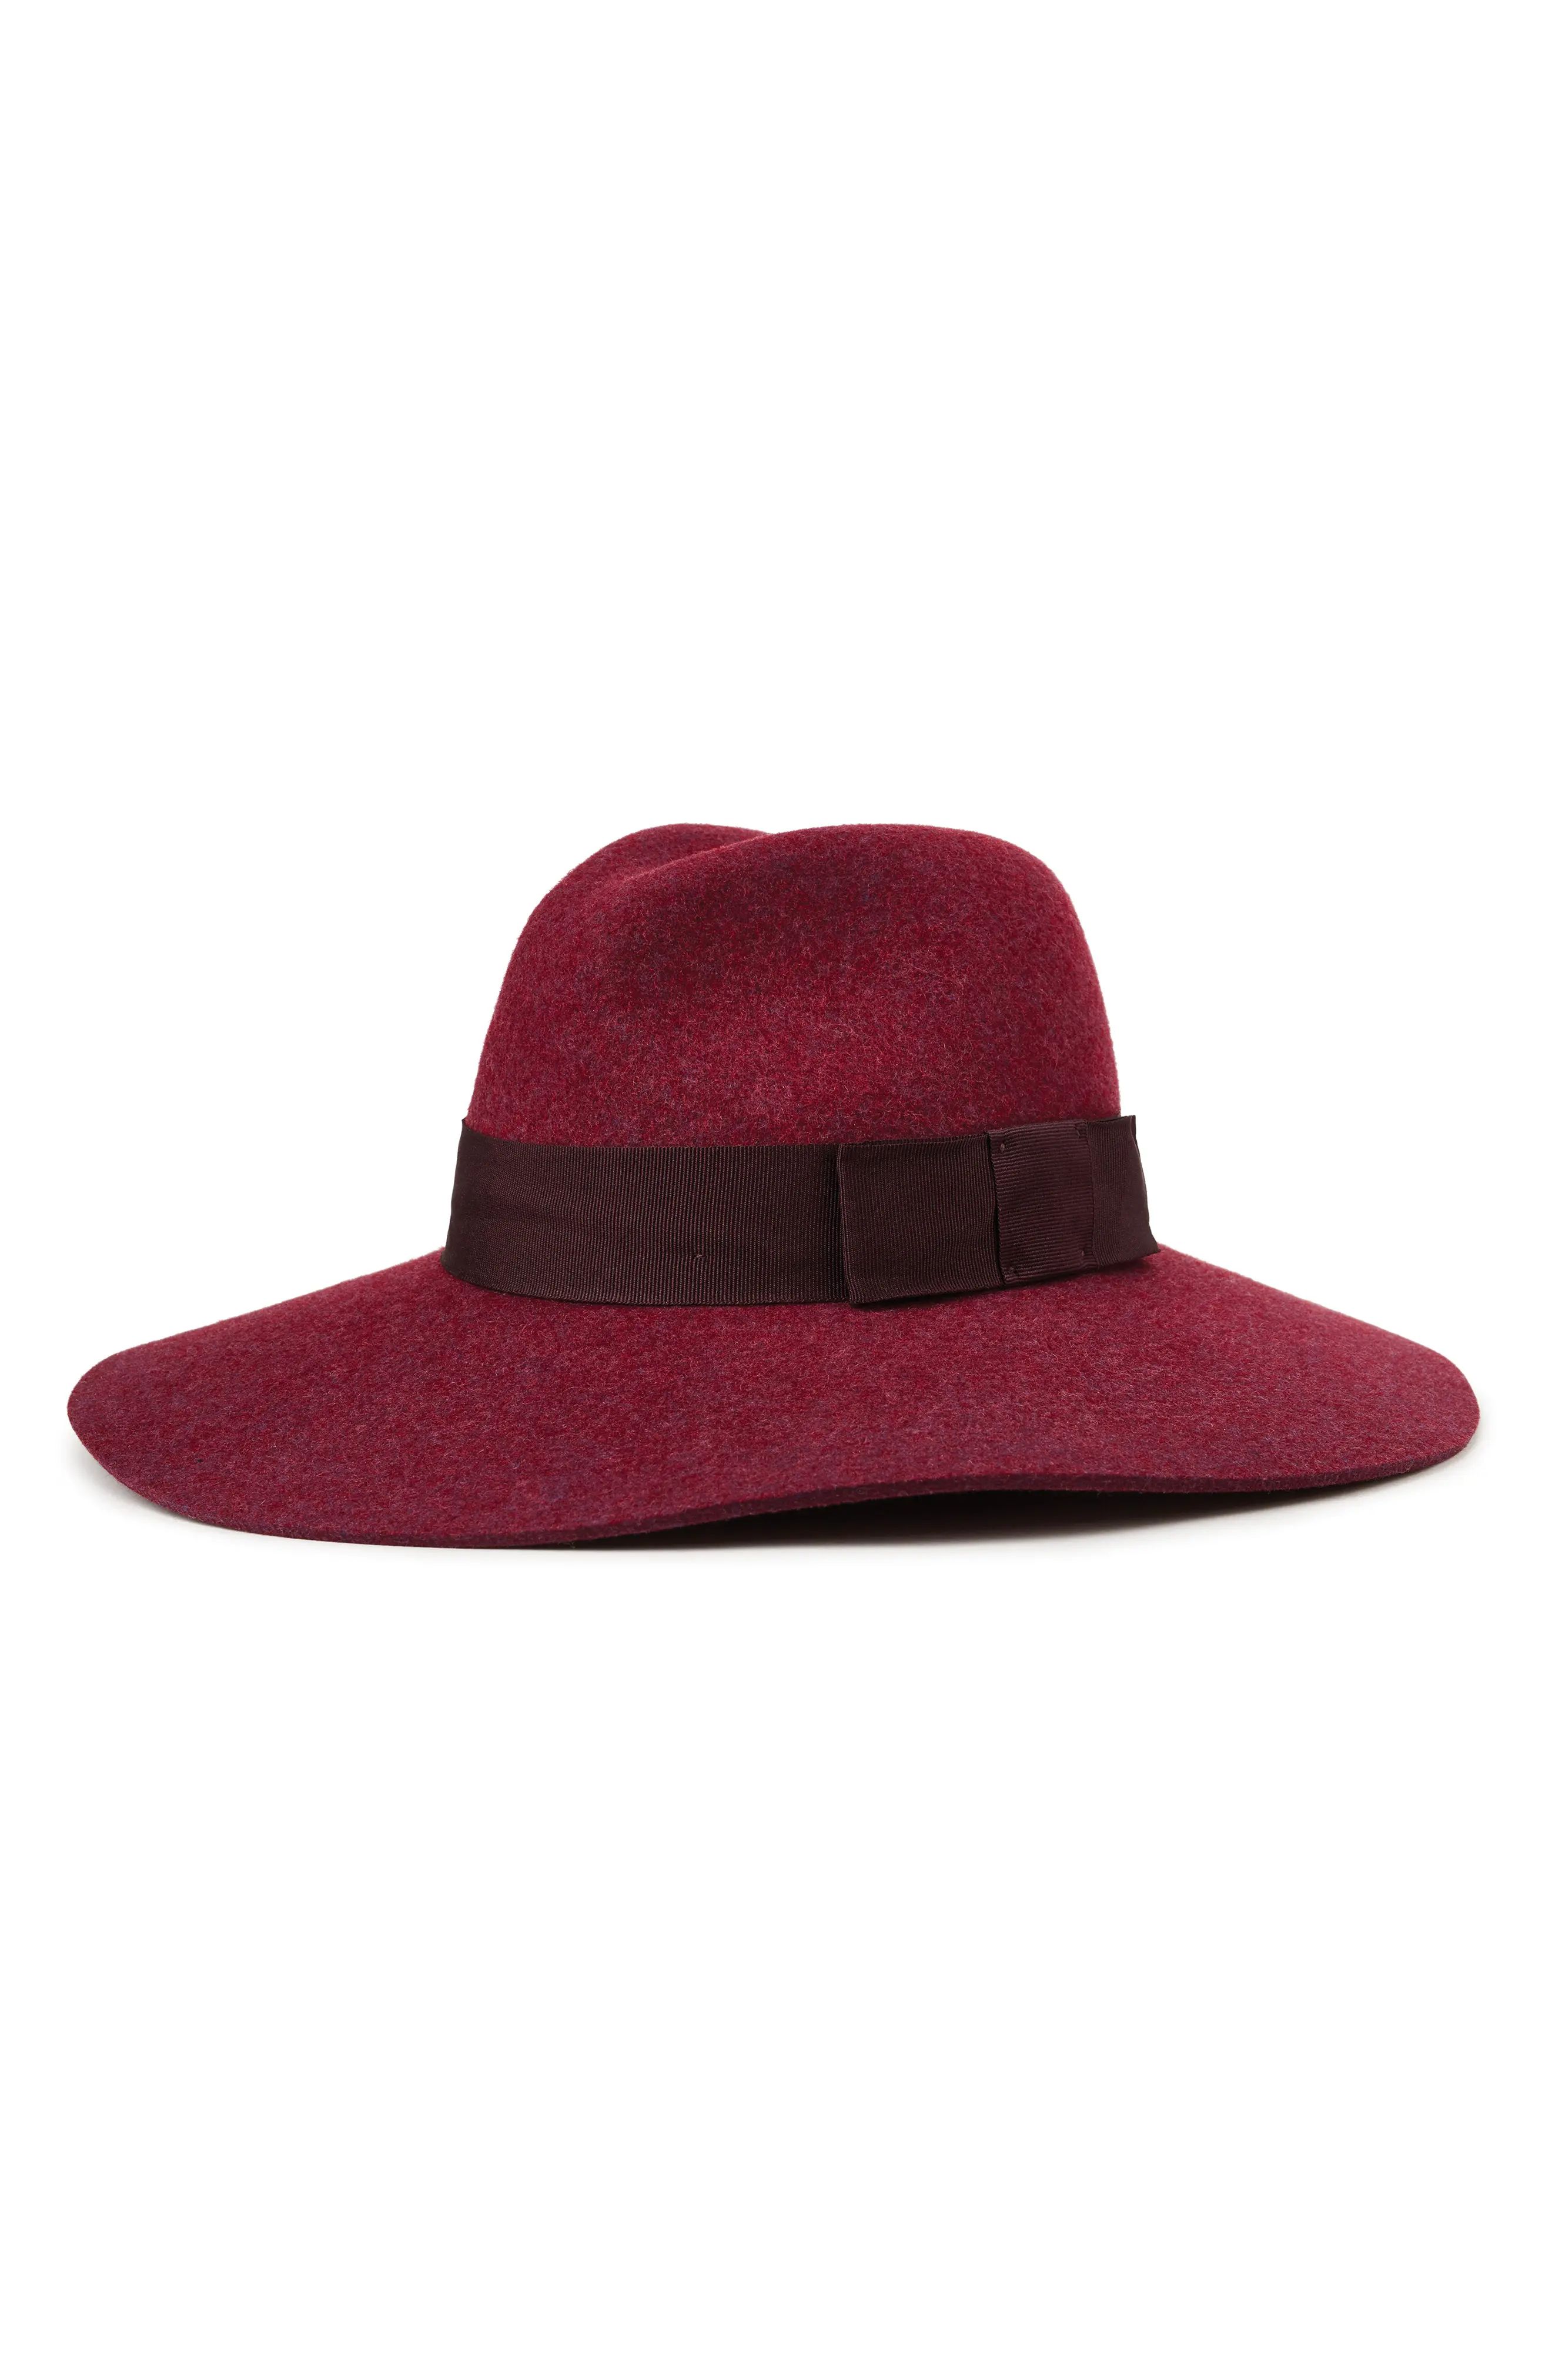 Women's Brixton 'Piper' Floppy Wool Hat - Red | Nordstrom